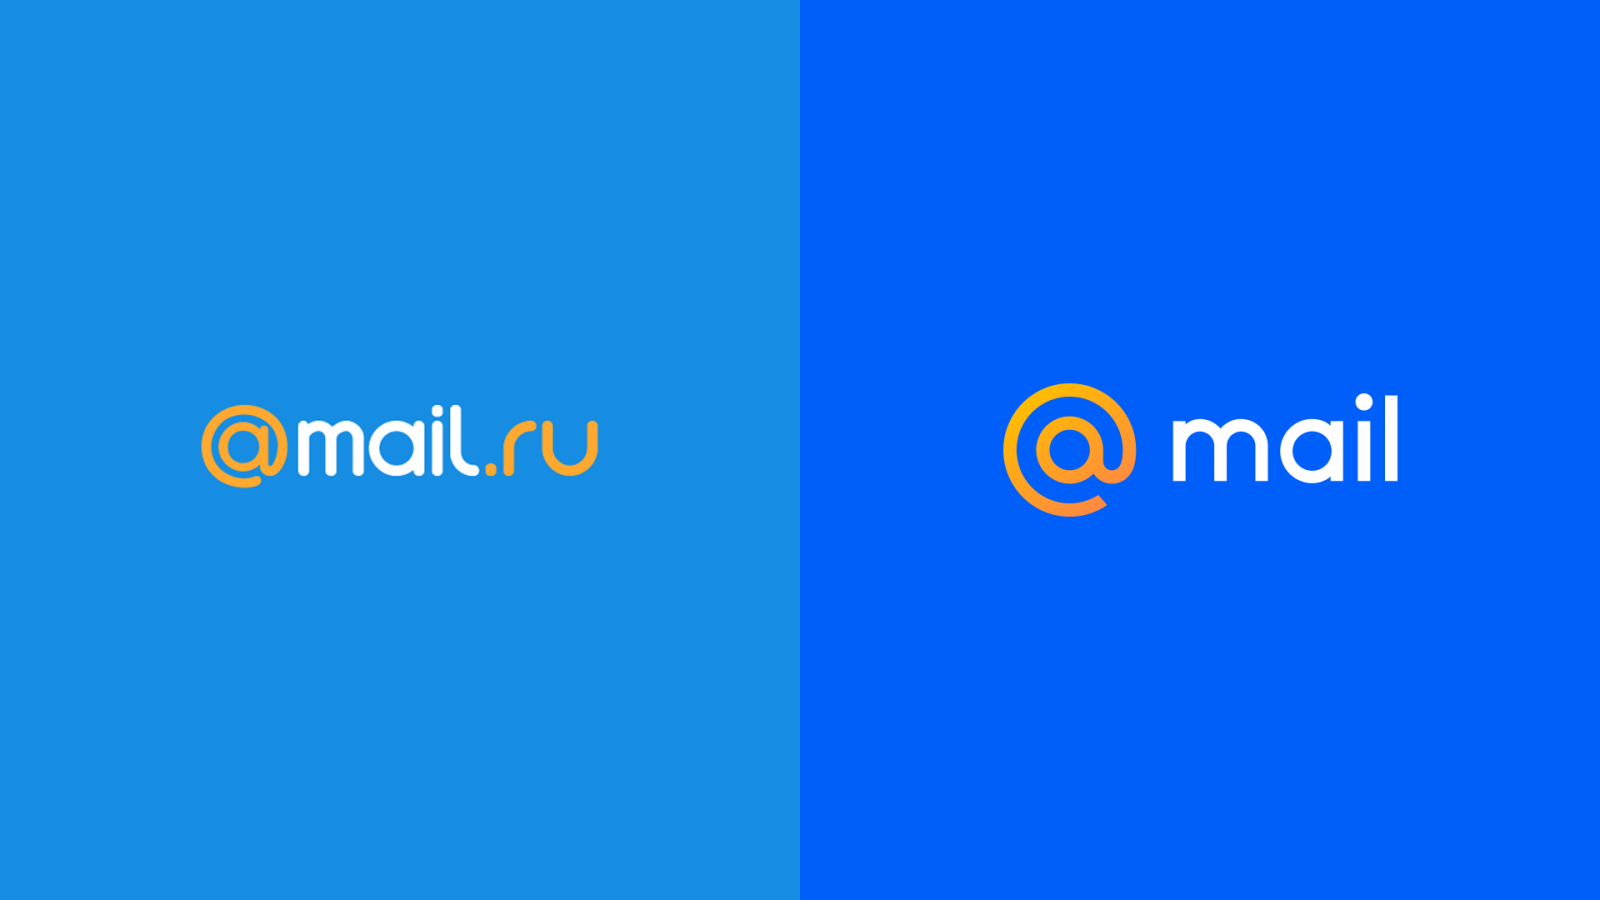 Mail ru hash. Mail. Почта майл. Mail.ru лого. Логотип почты мейл.